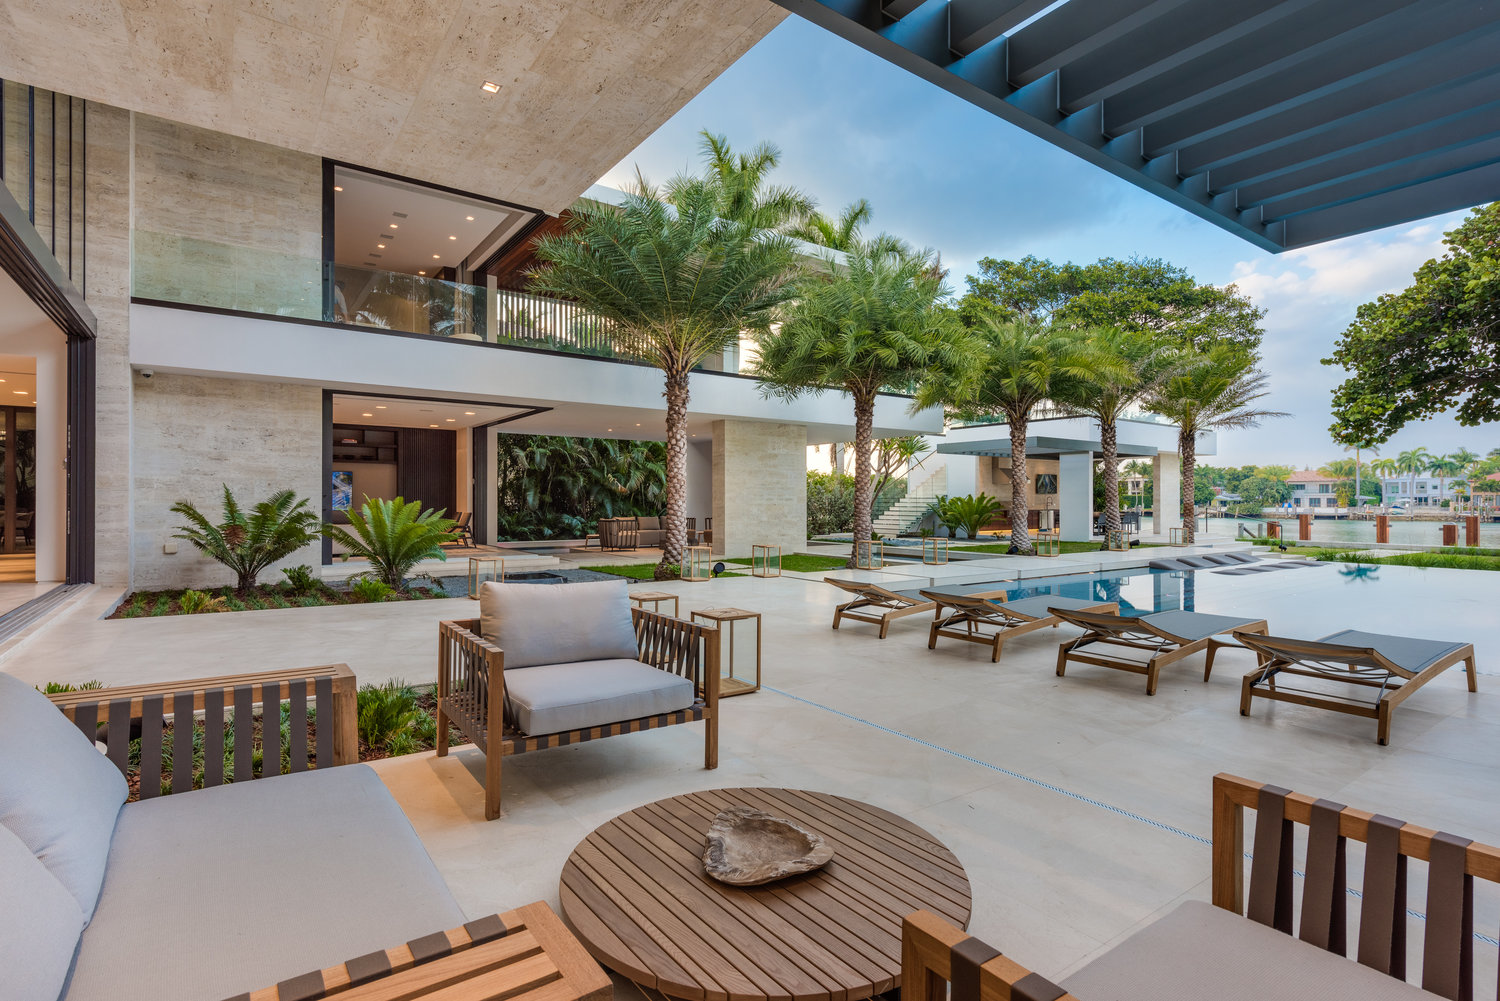 73 Palm Ave. located on Miami Beach’s prestigious Palm Island and designed ...